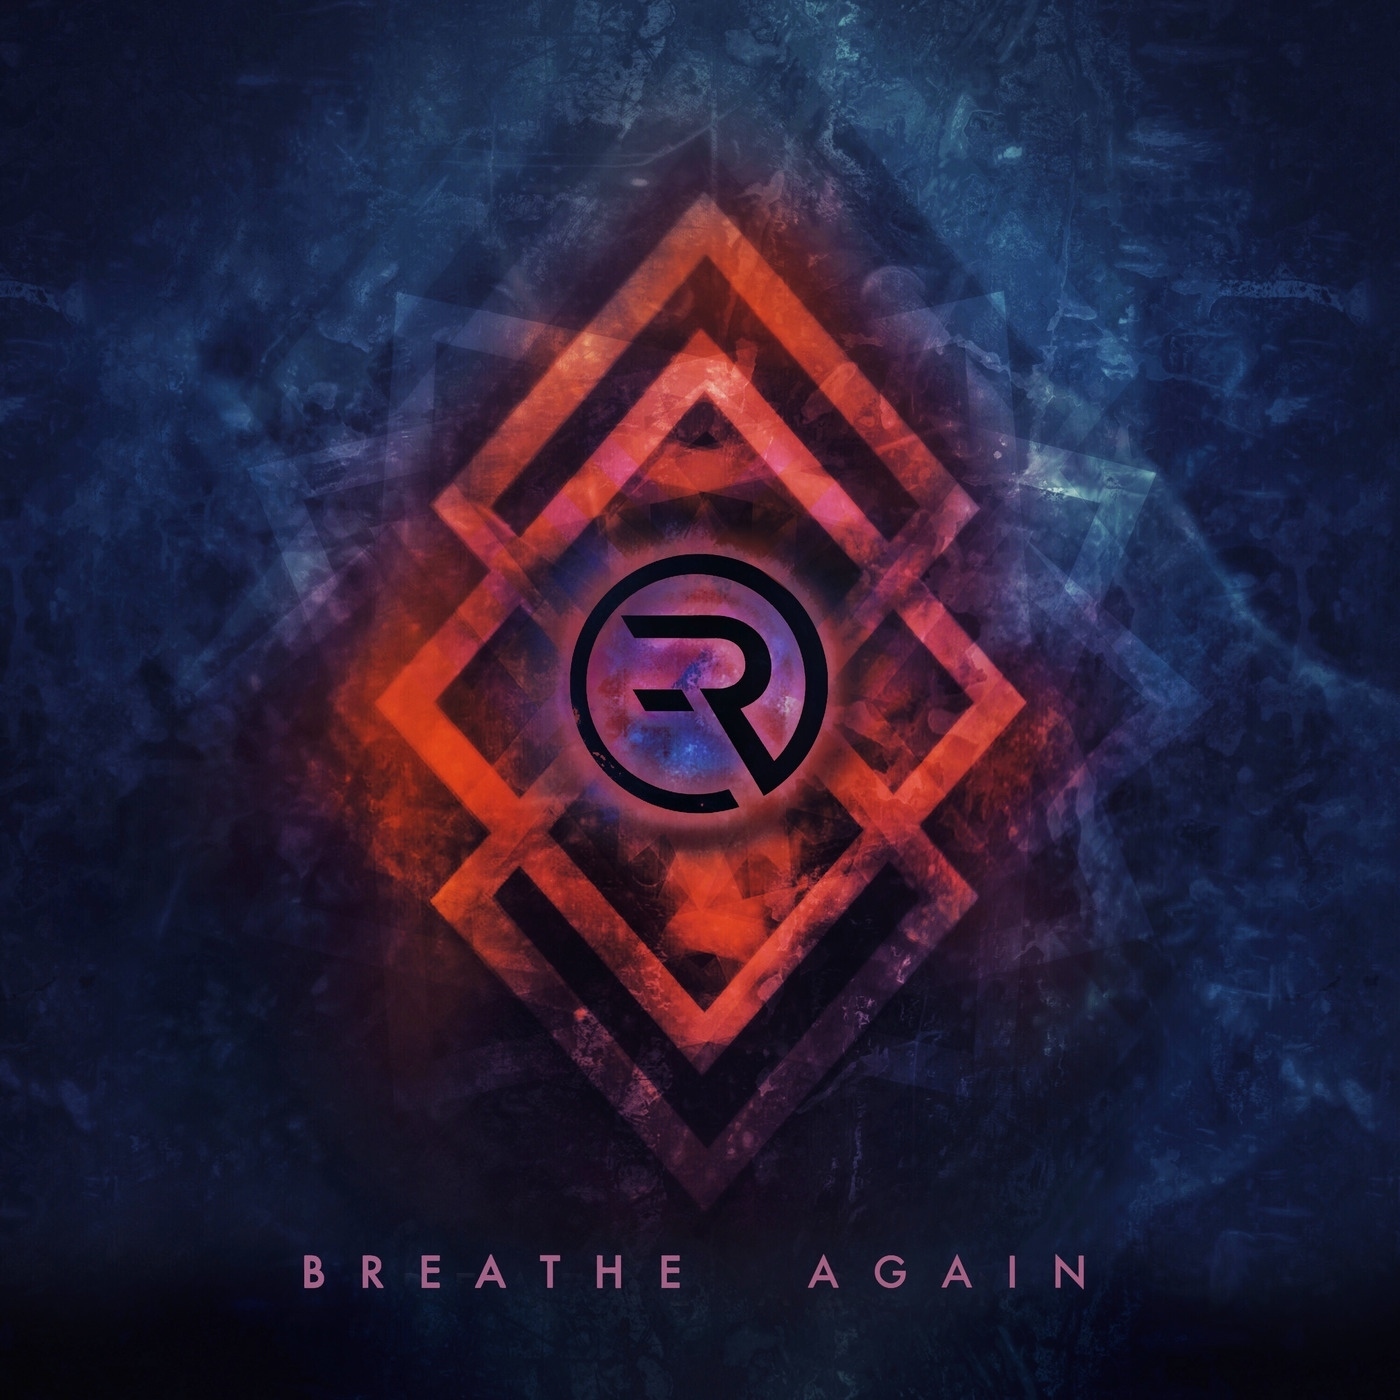 Ravenface - Breathe Again (2018) Album Info